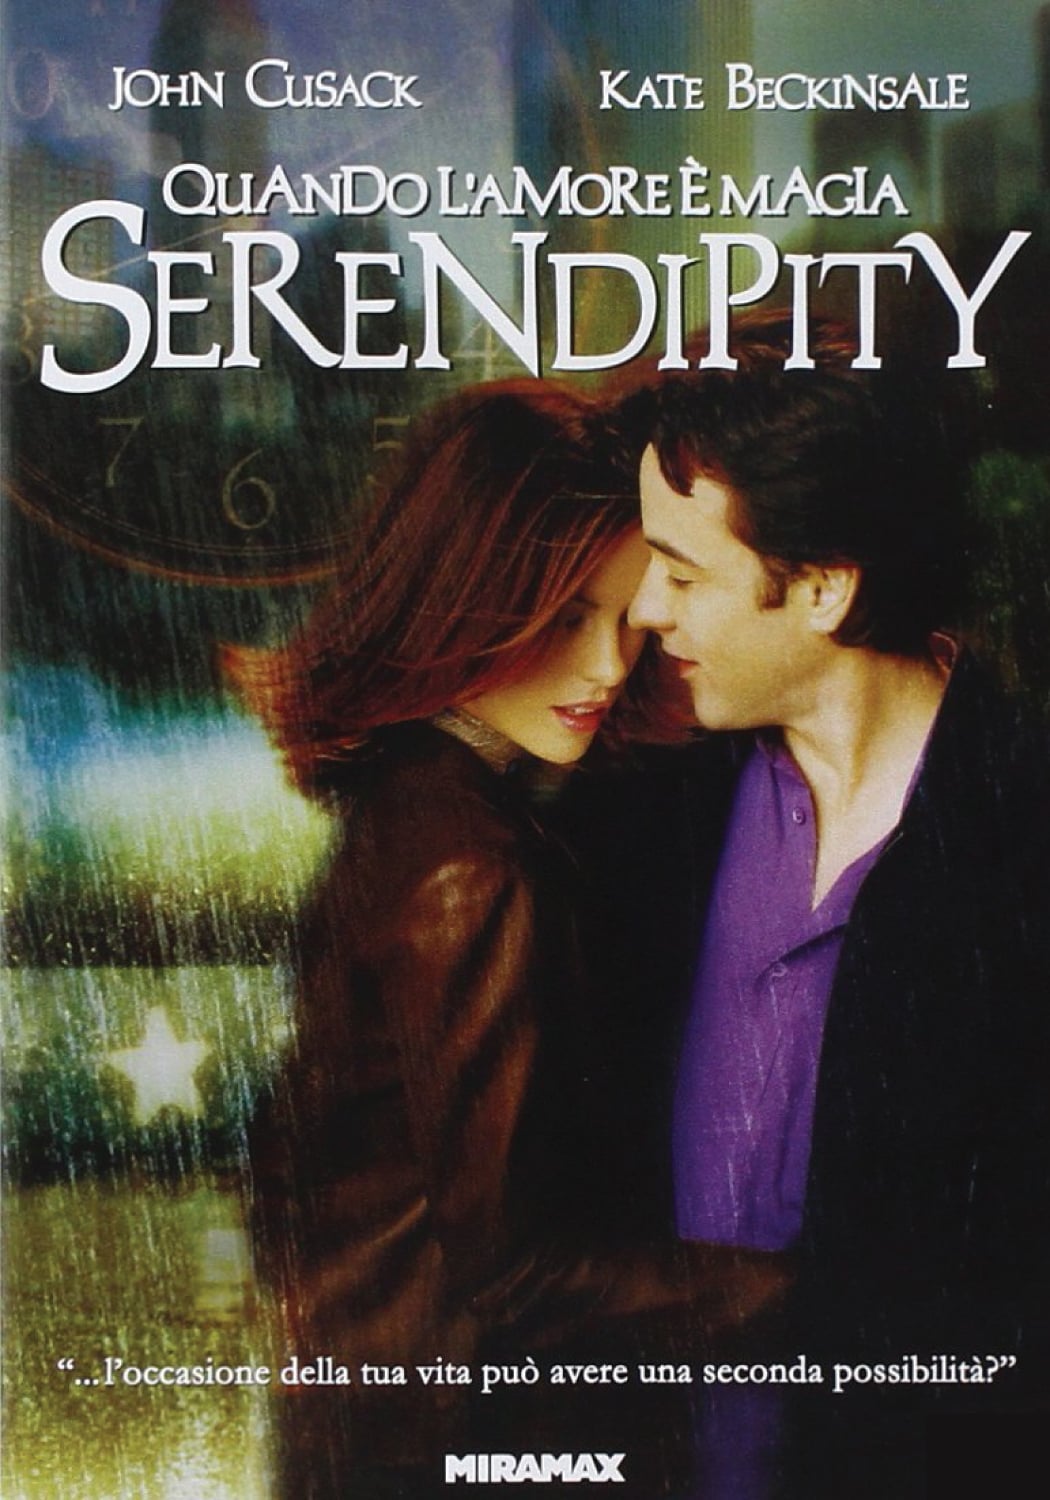 Serendipity Main Poster